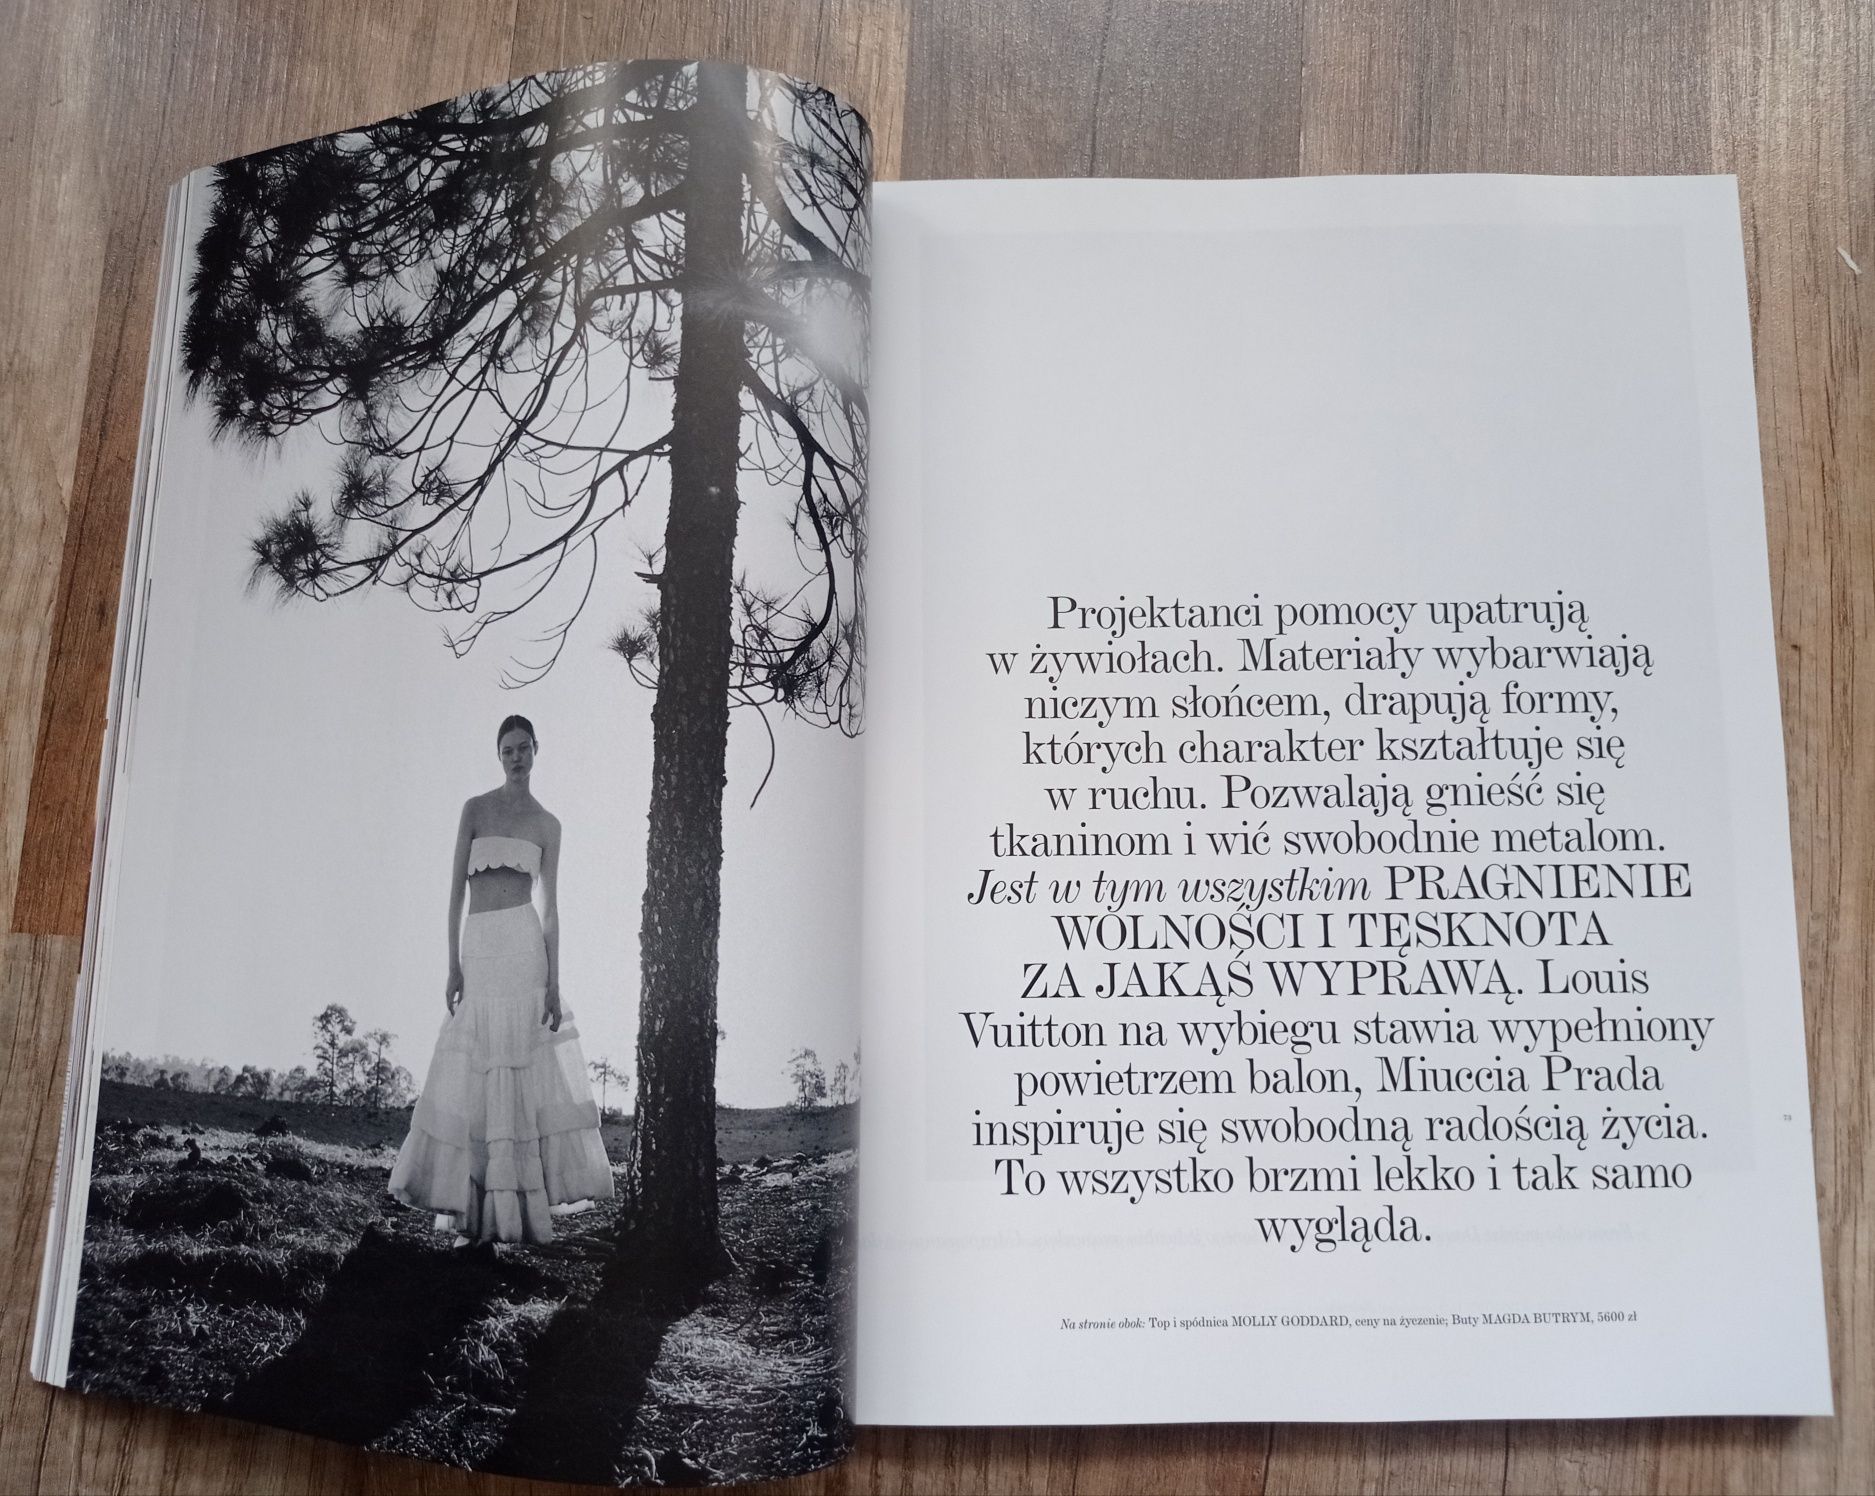 Vogue Polska 03/2024